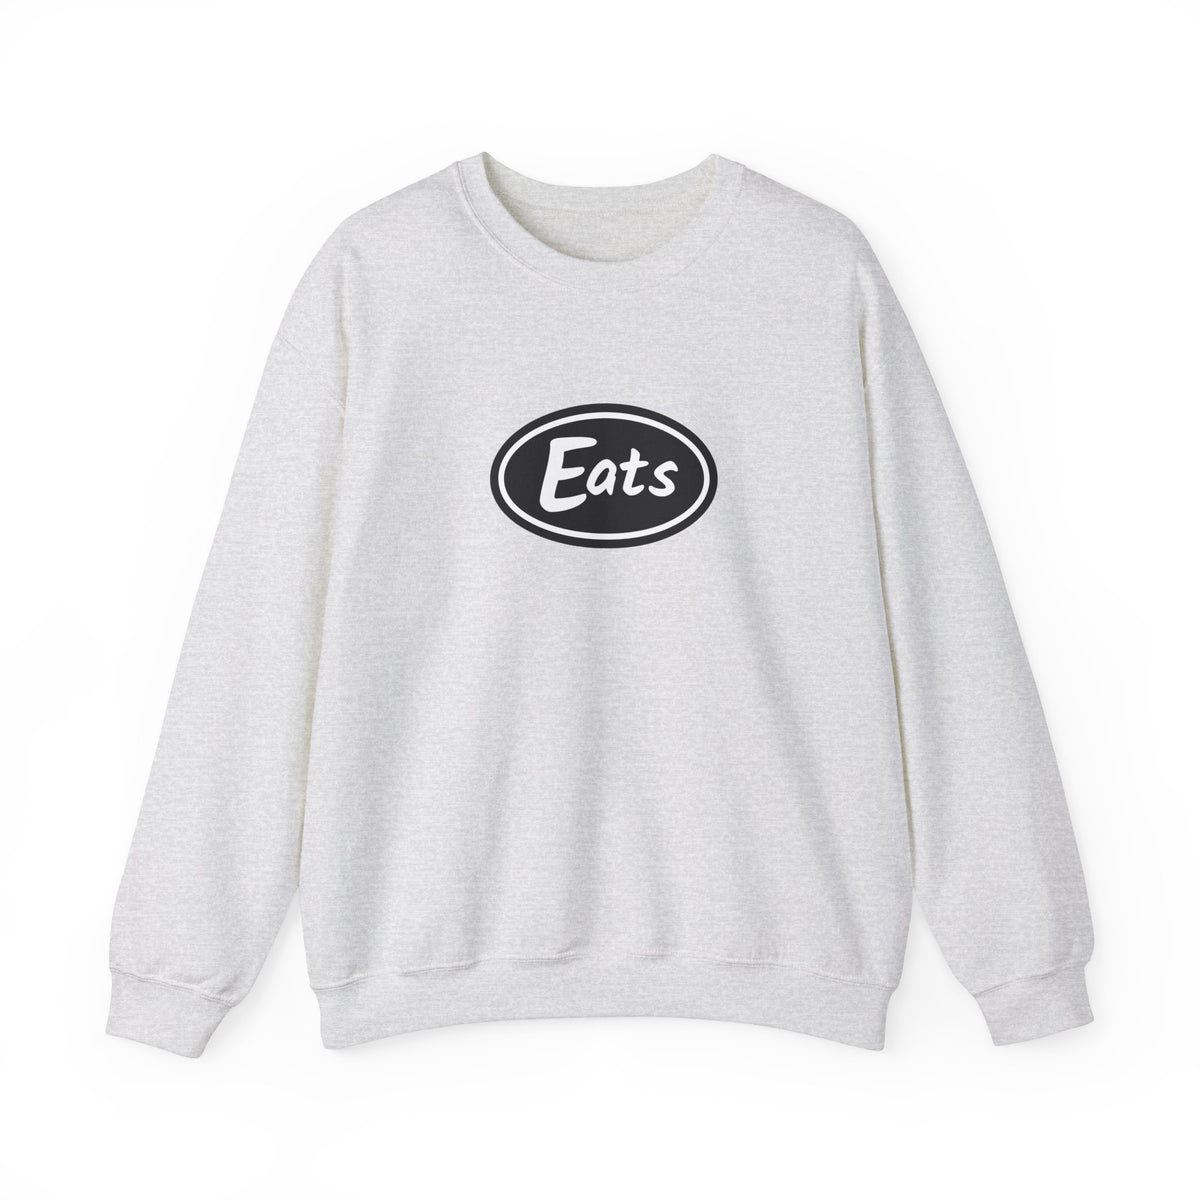 Eats Pullover - Sweatshirt - Twisted Jezebel